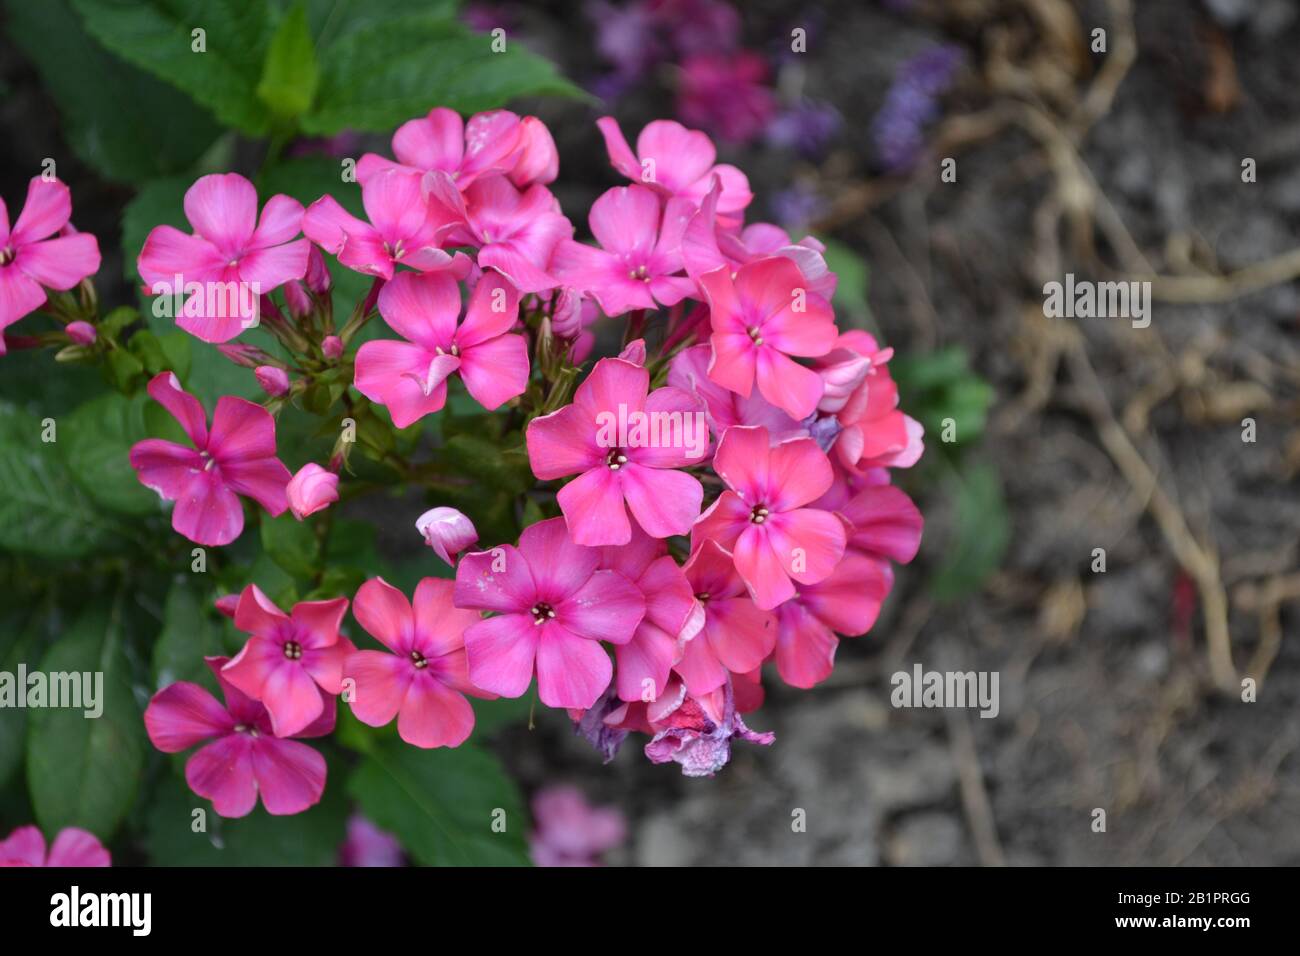 Phlox. Polemoniaceae. Growing flowers. Flowerbed. Garden. Floriculture. Pink inflorescence. Beautiful flowers. Green leaves. Bushes. Horizontal photo Stock Photo